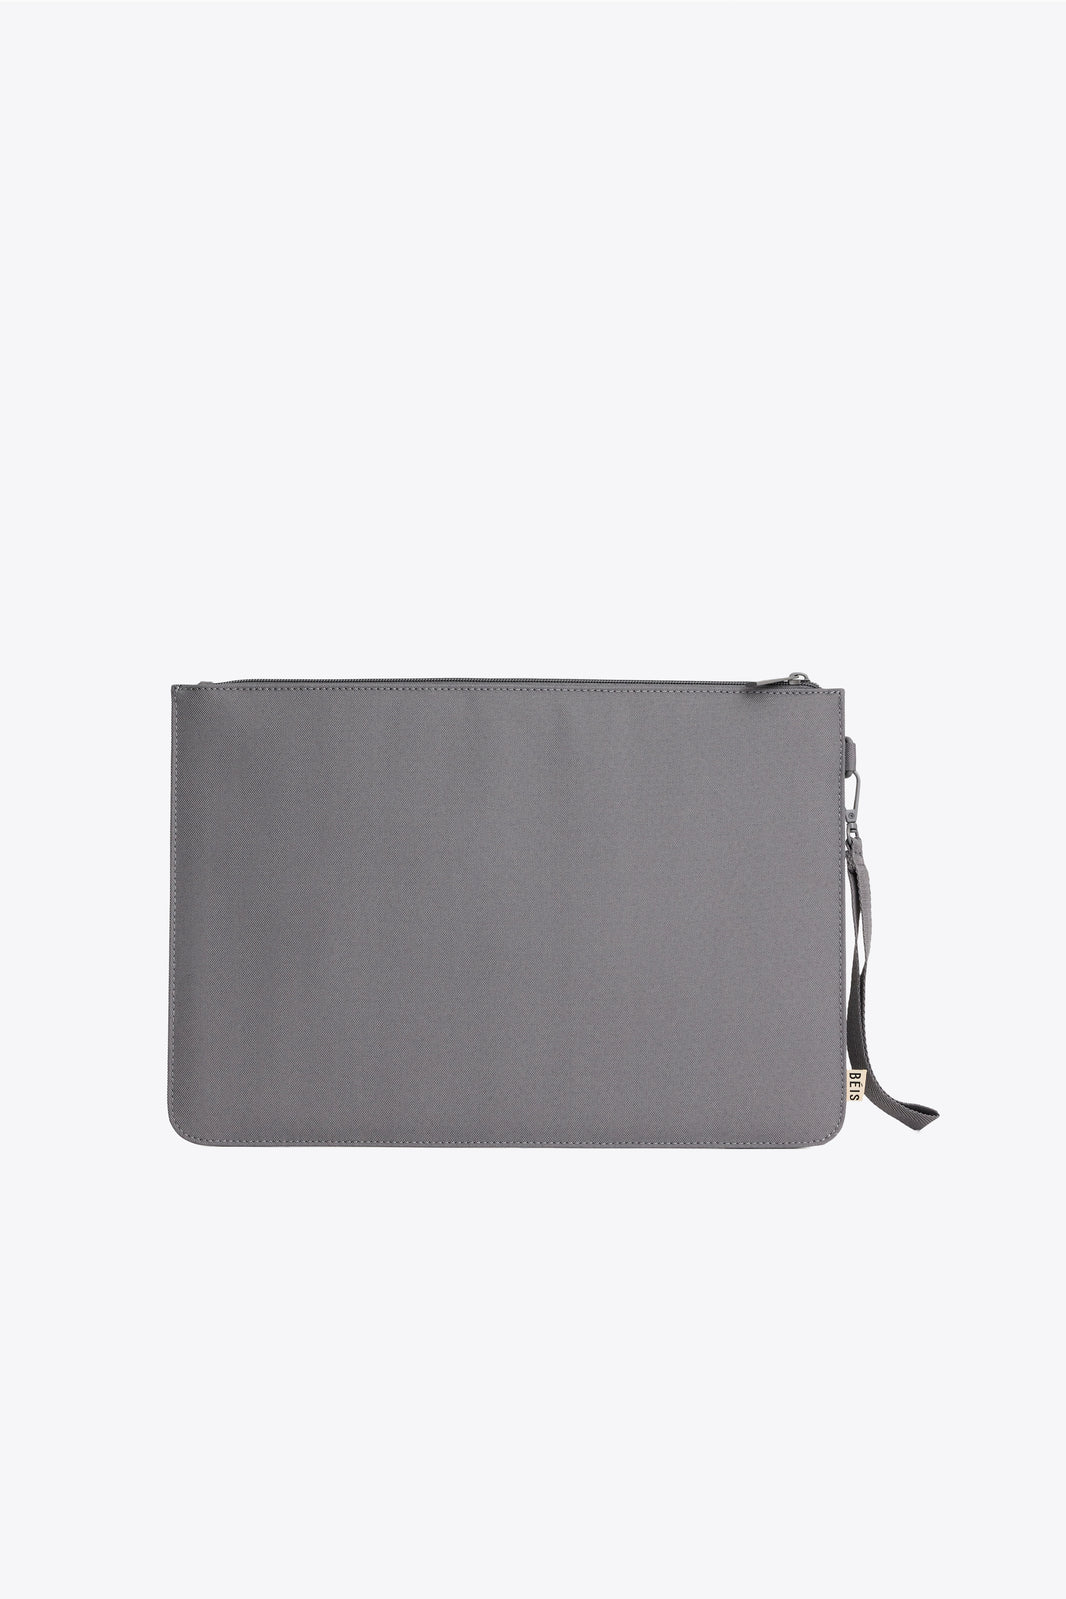 Work Totes - Designer Laptop Bags for Women